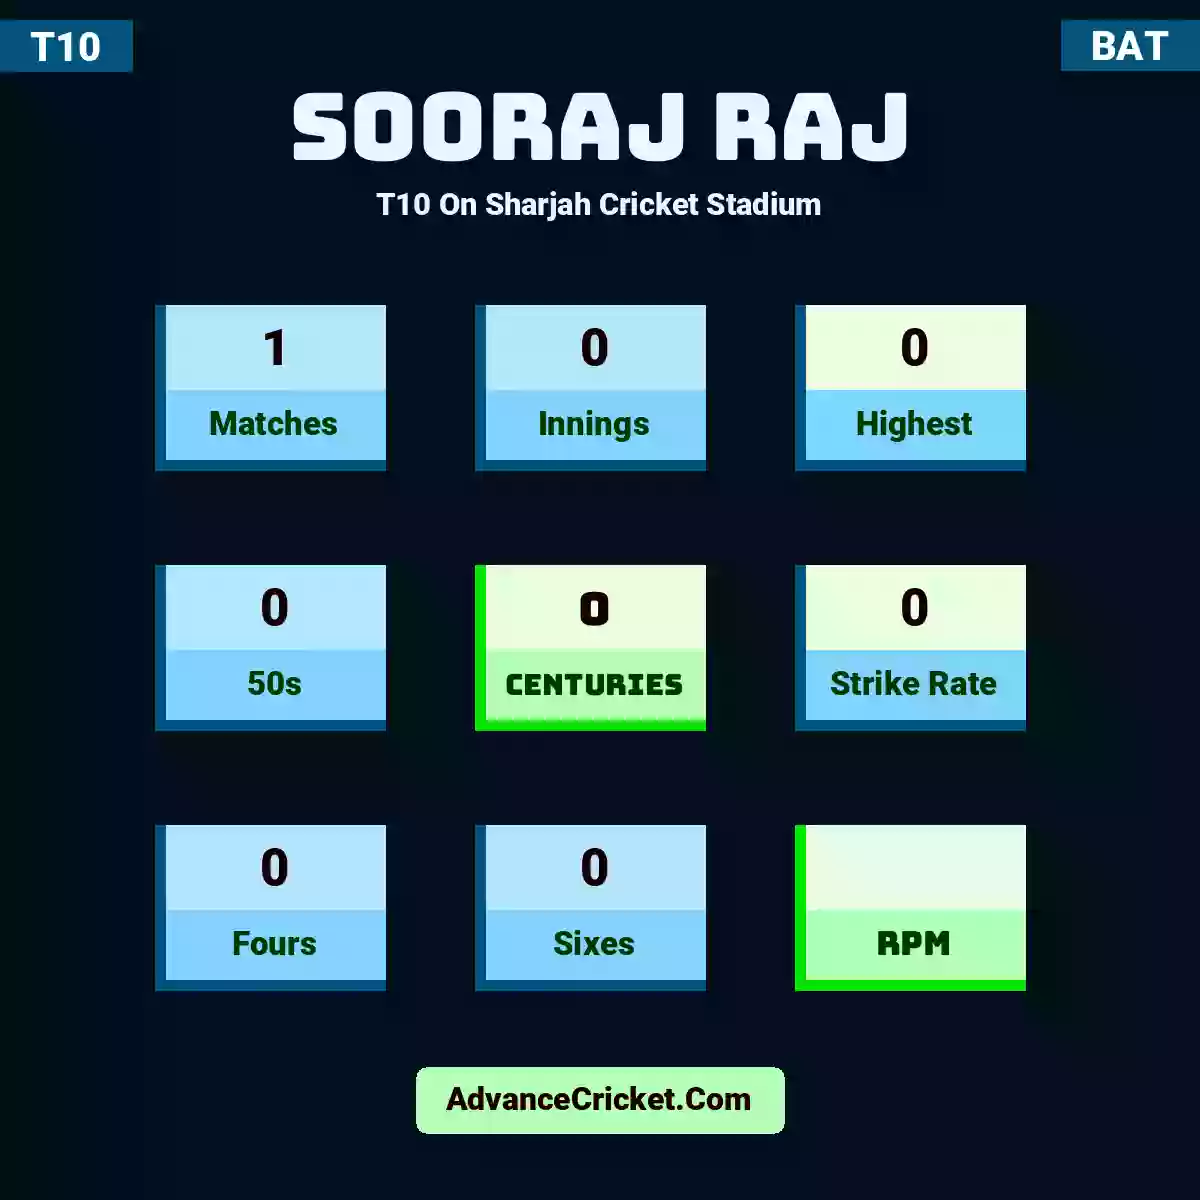 Sooraj Raj T10  On Sharjah Cricket Stadium, Sooraj Raj played 1 matches, scored 0 runs as highest, 0 half-centuries, and 0 centuries, with a strike rate of 0. S.Raj hit 0 fours and 0 sixes.